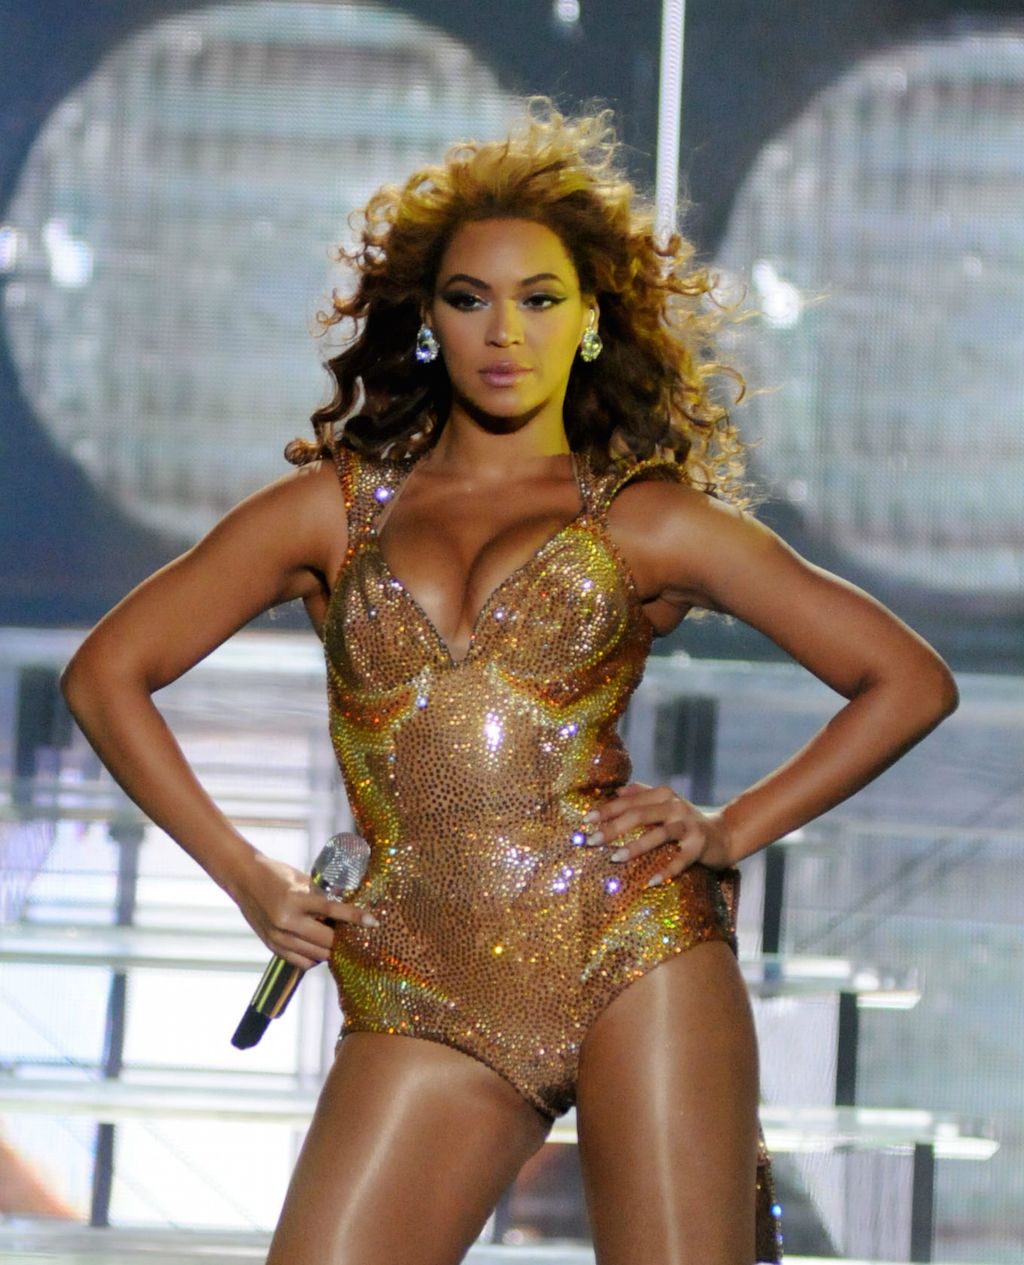 Beyonce power poza čudežna ženska poza